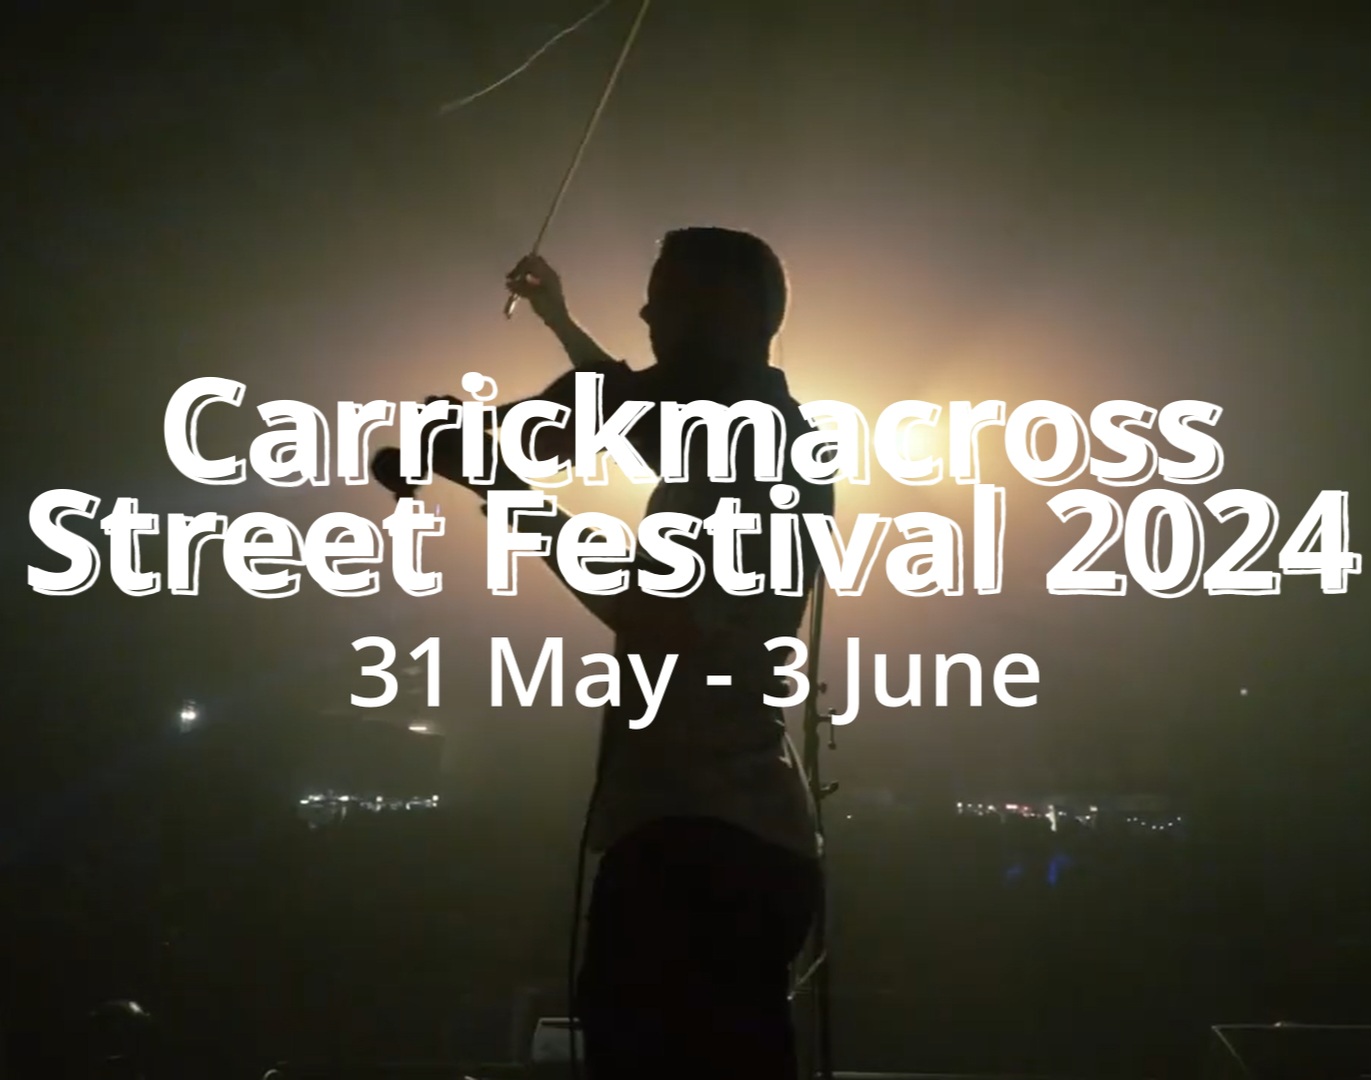 Carrickmacross Street festival dates